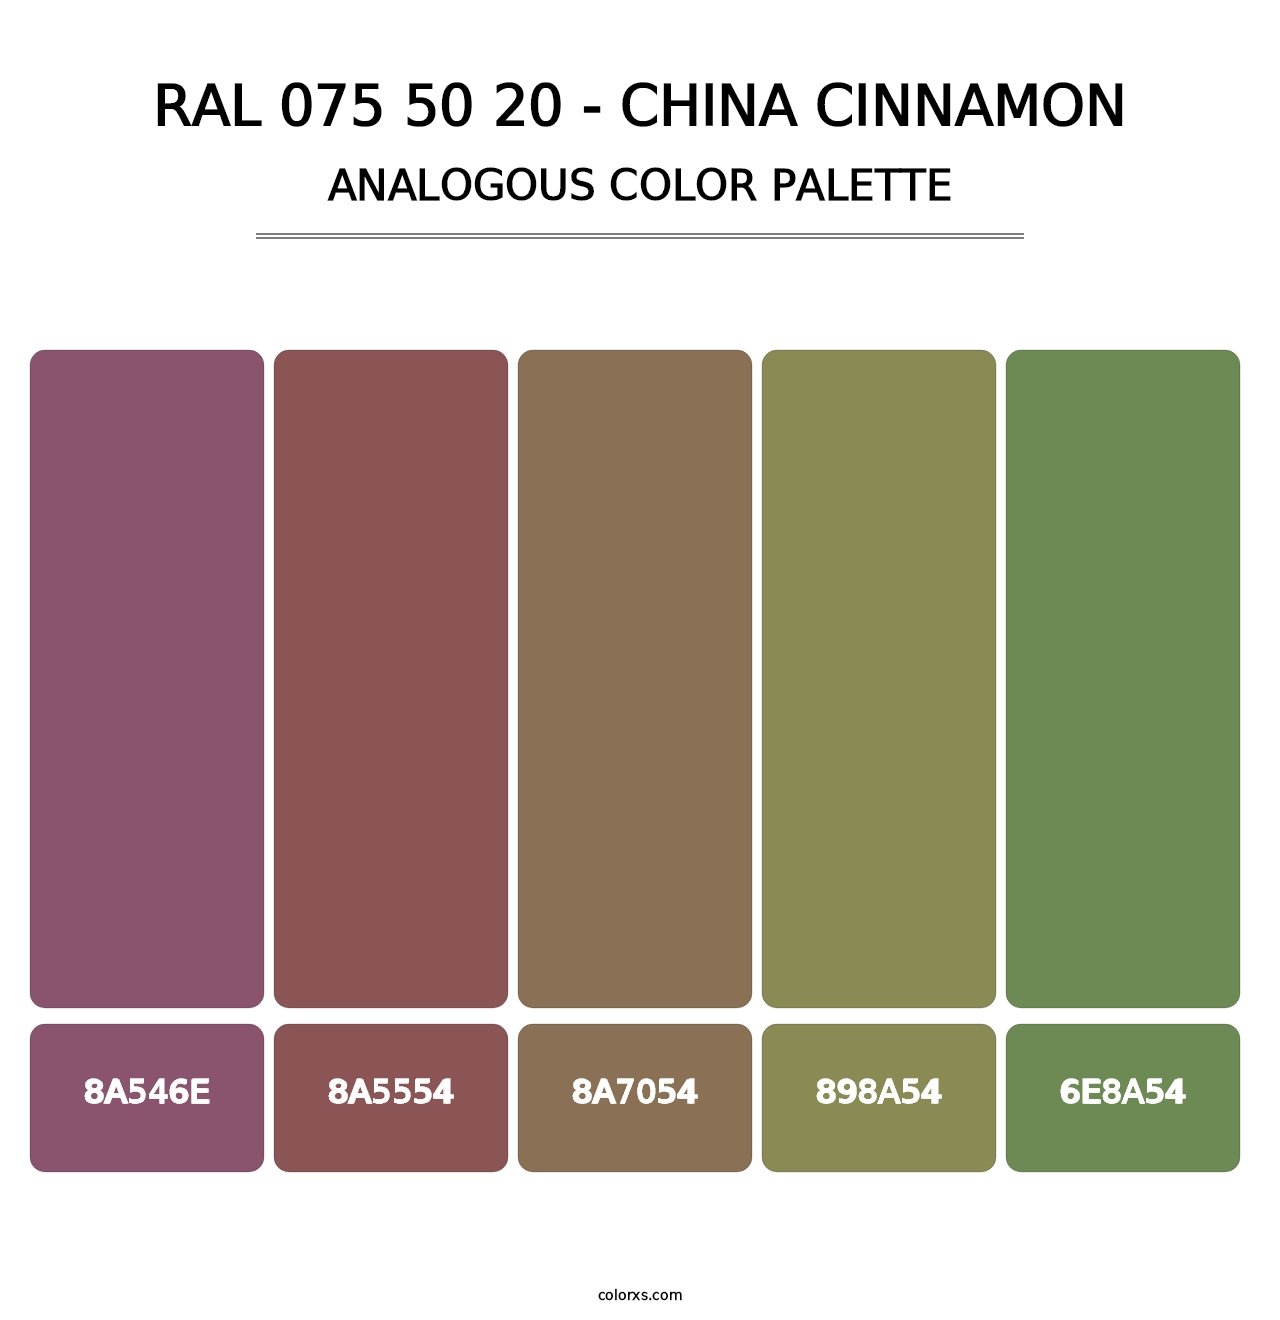 RAL 075 50 20 - China Cinnamon - Analogous Color Palette